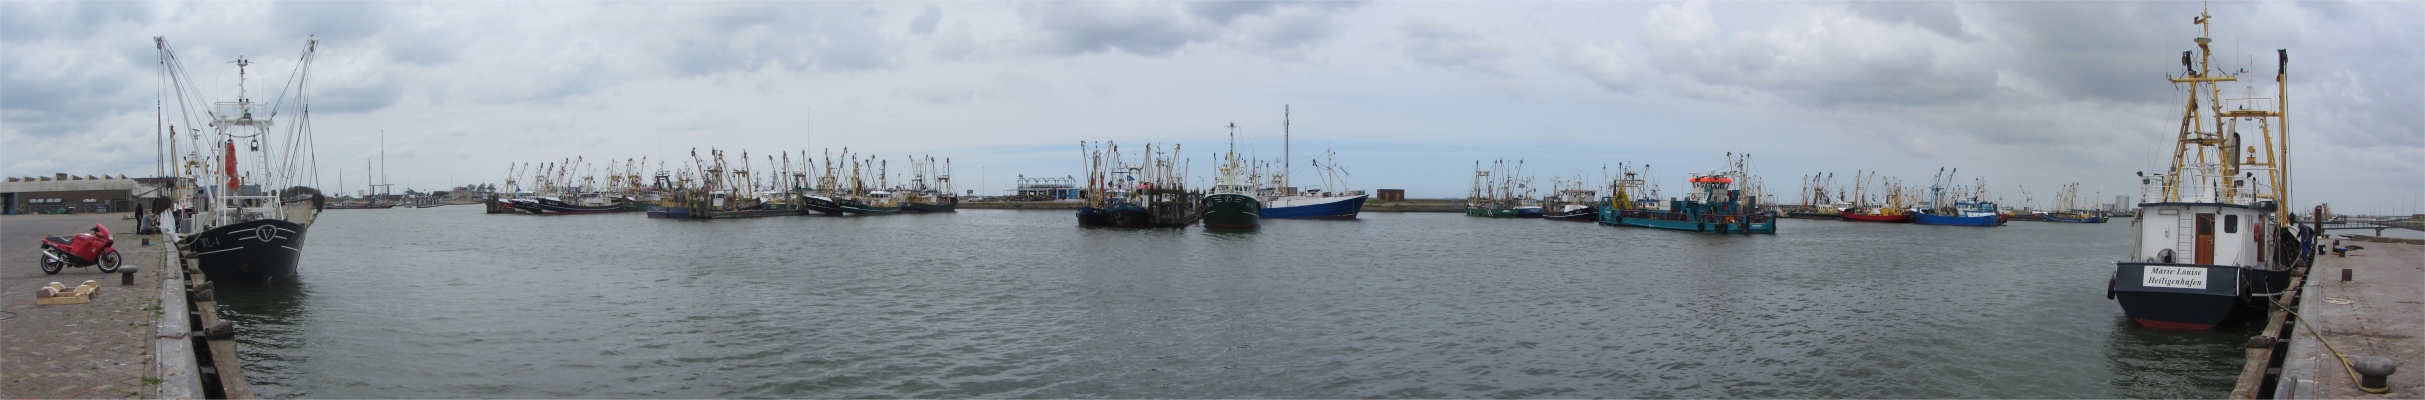 lauwersoog_fishing_harbour